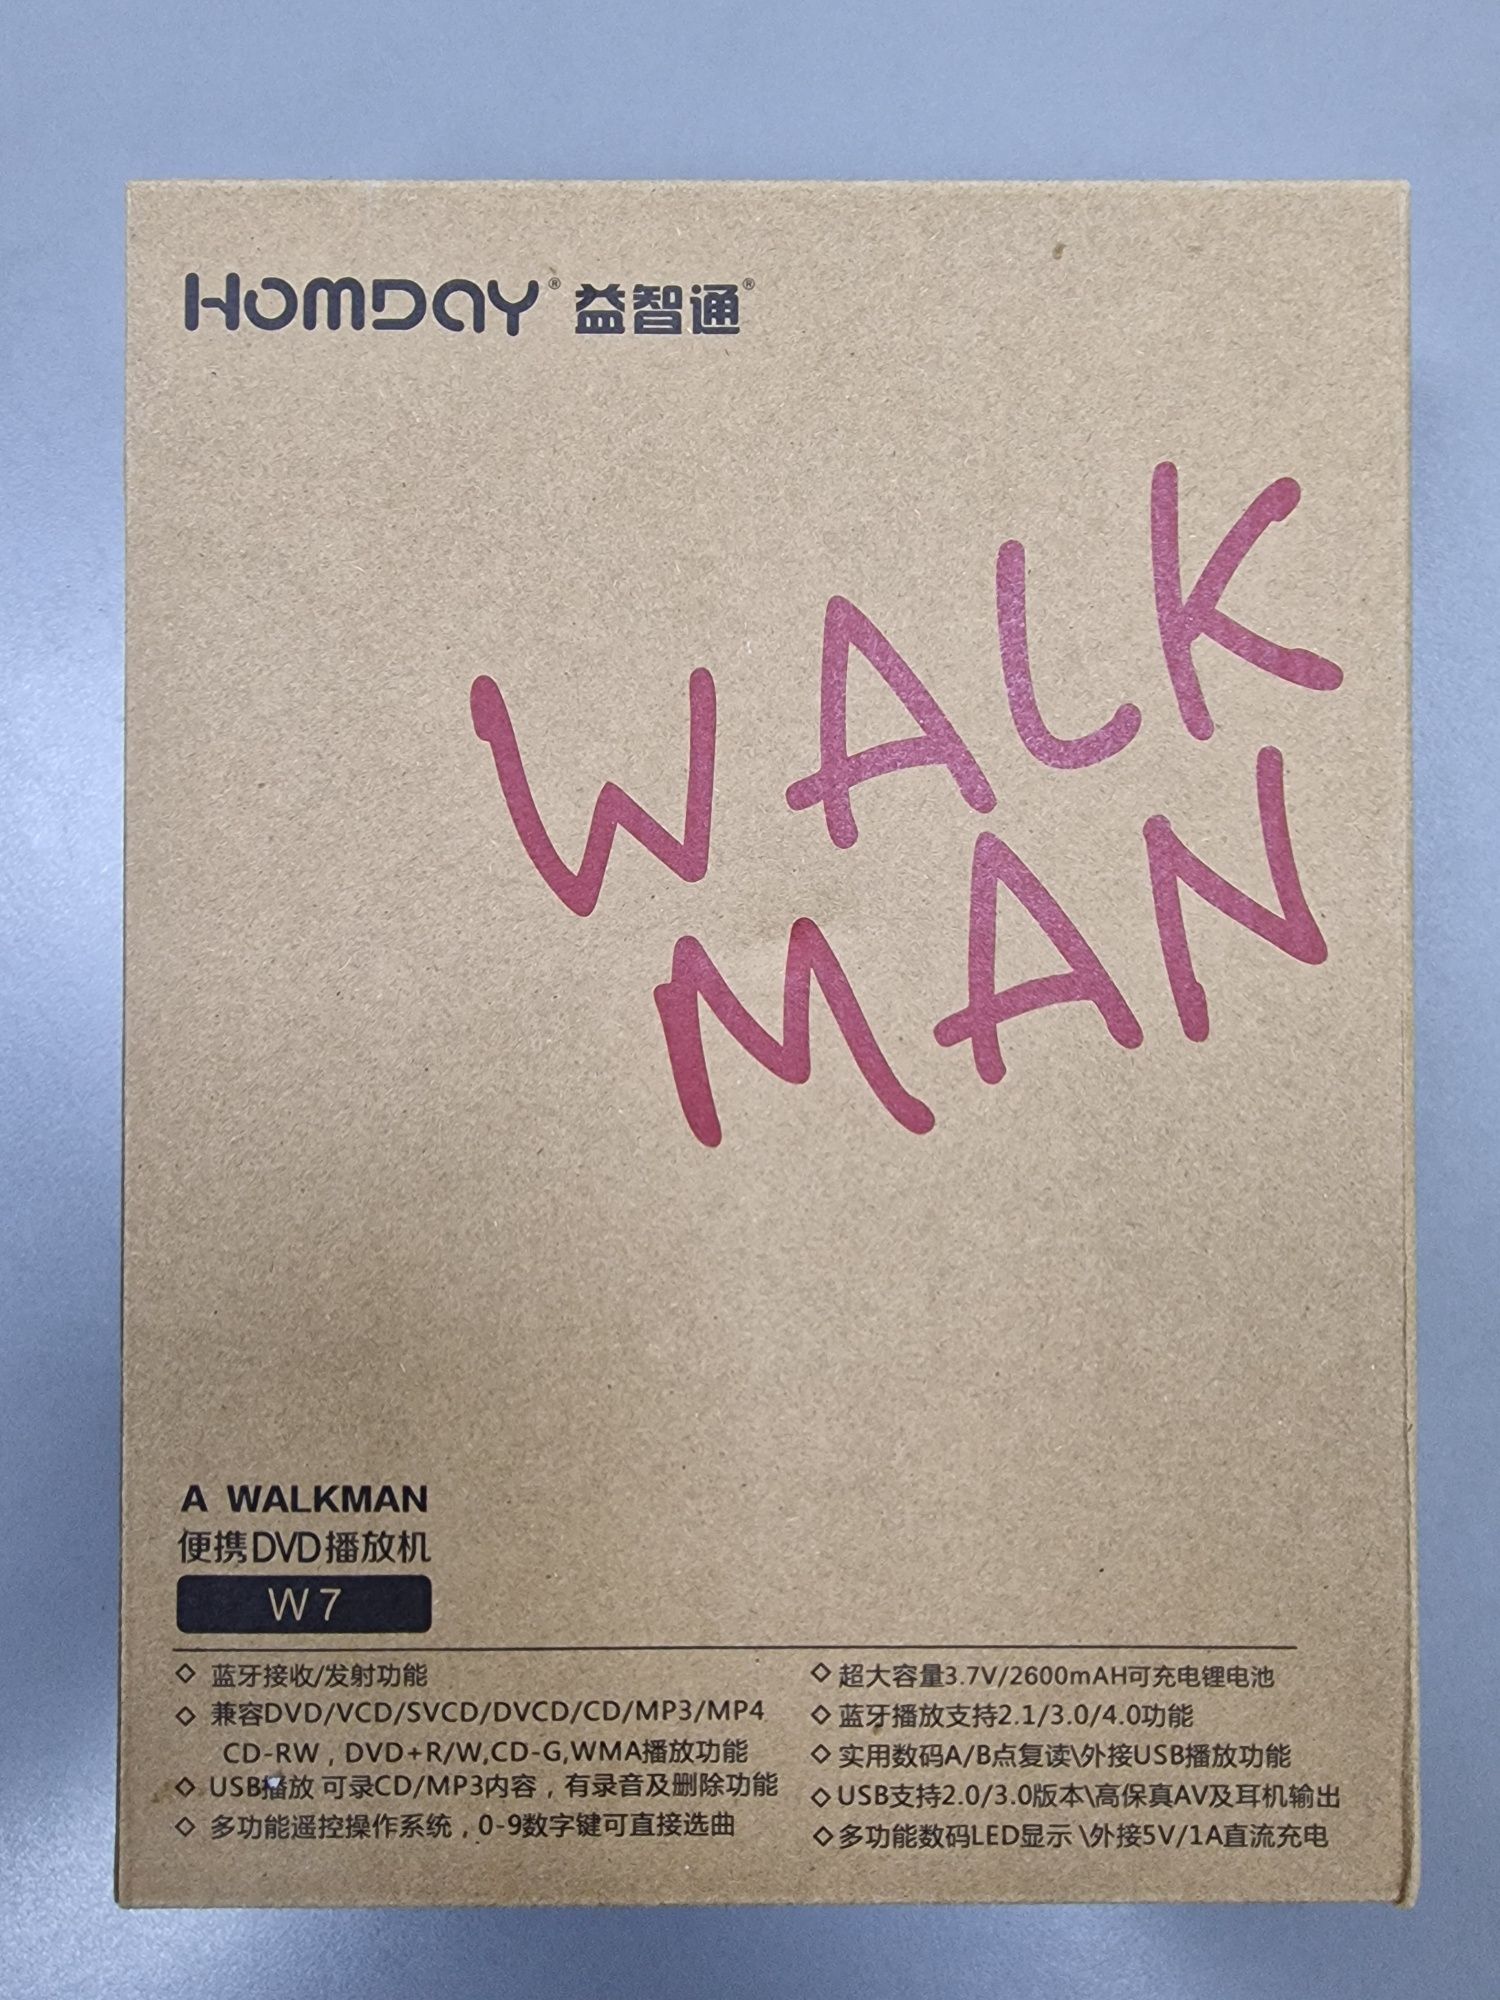 CD DVD MP3 MP4 плеер Walkman Homday